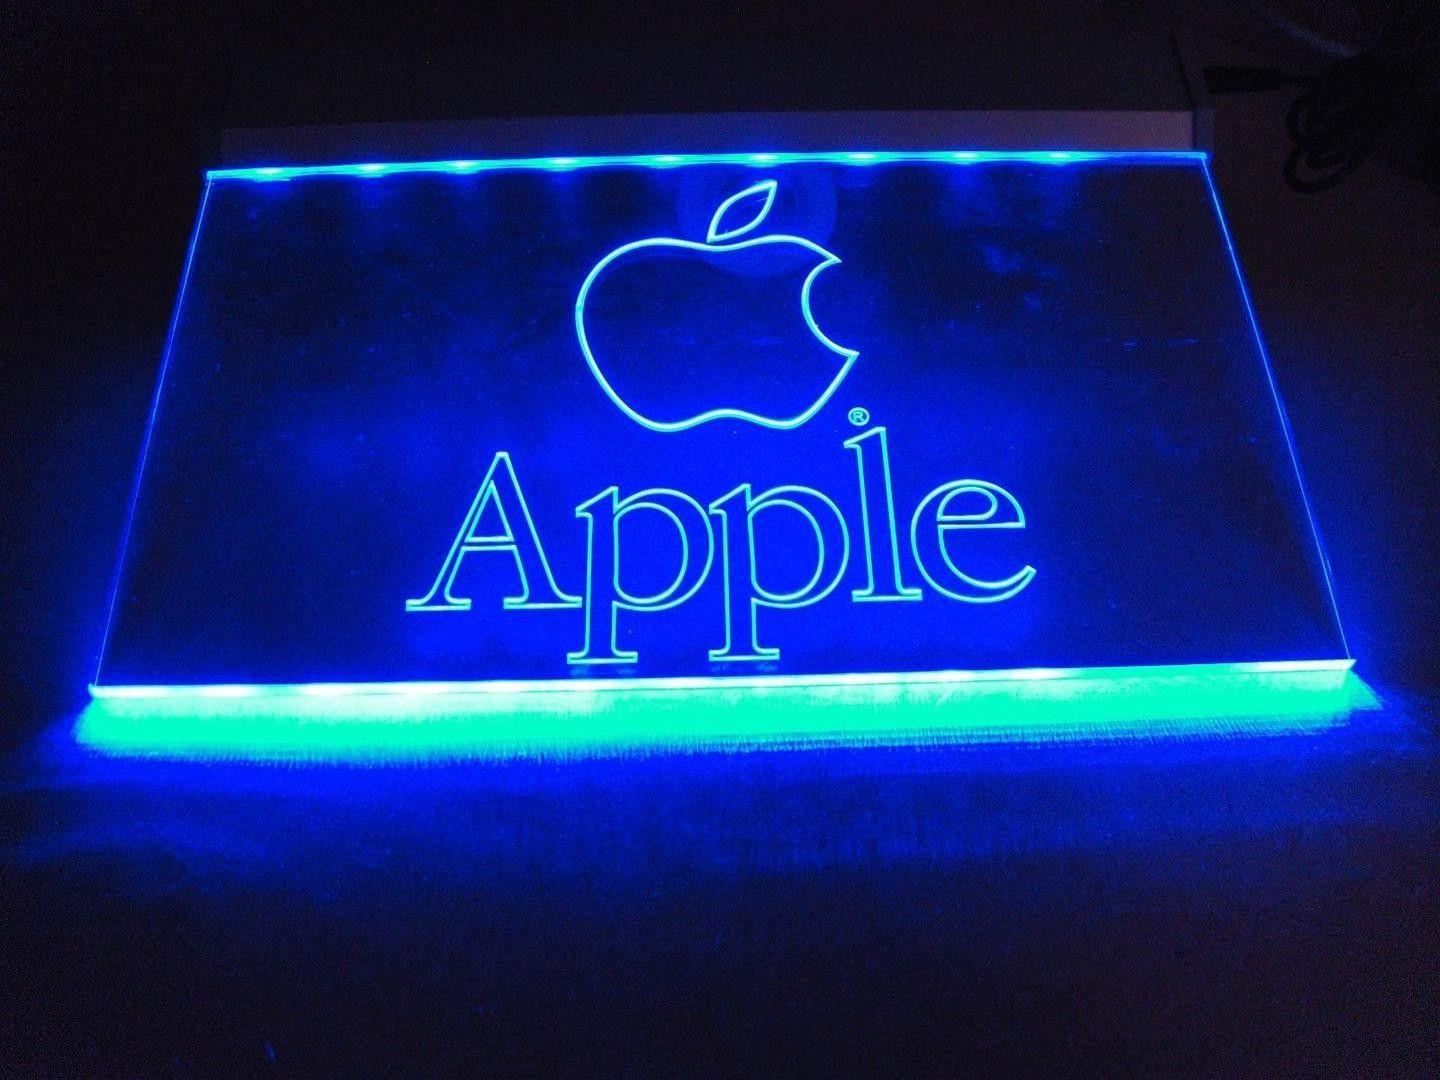 Cool Apple Logo - Super Cool Apple Logo Blue Light Sign, In Original Package -WORKING